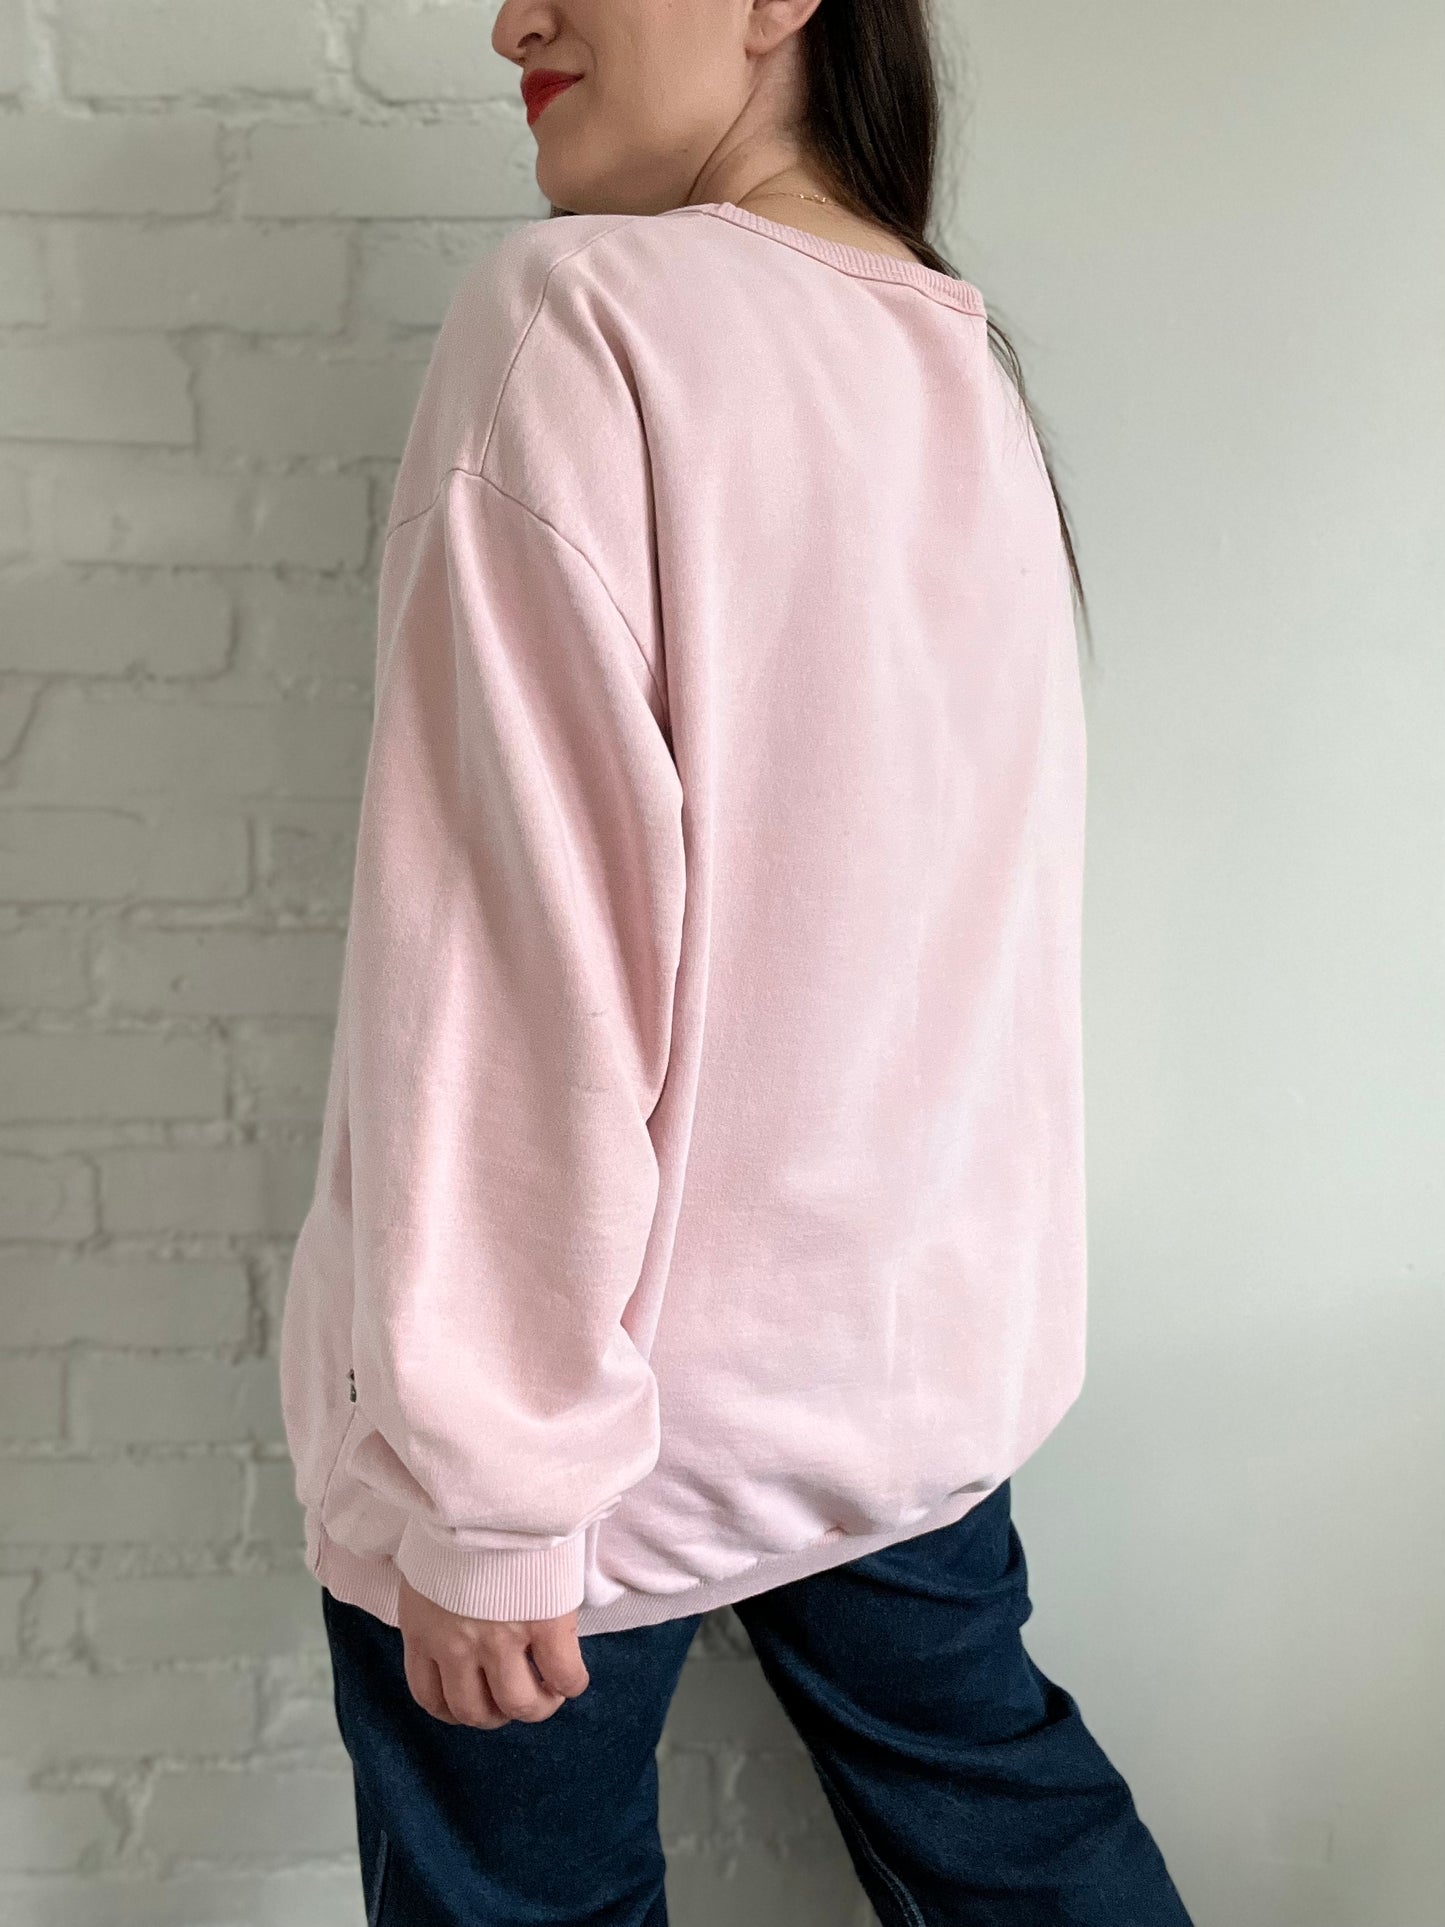 BOCA Original Pink Sweater - XXL